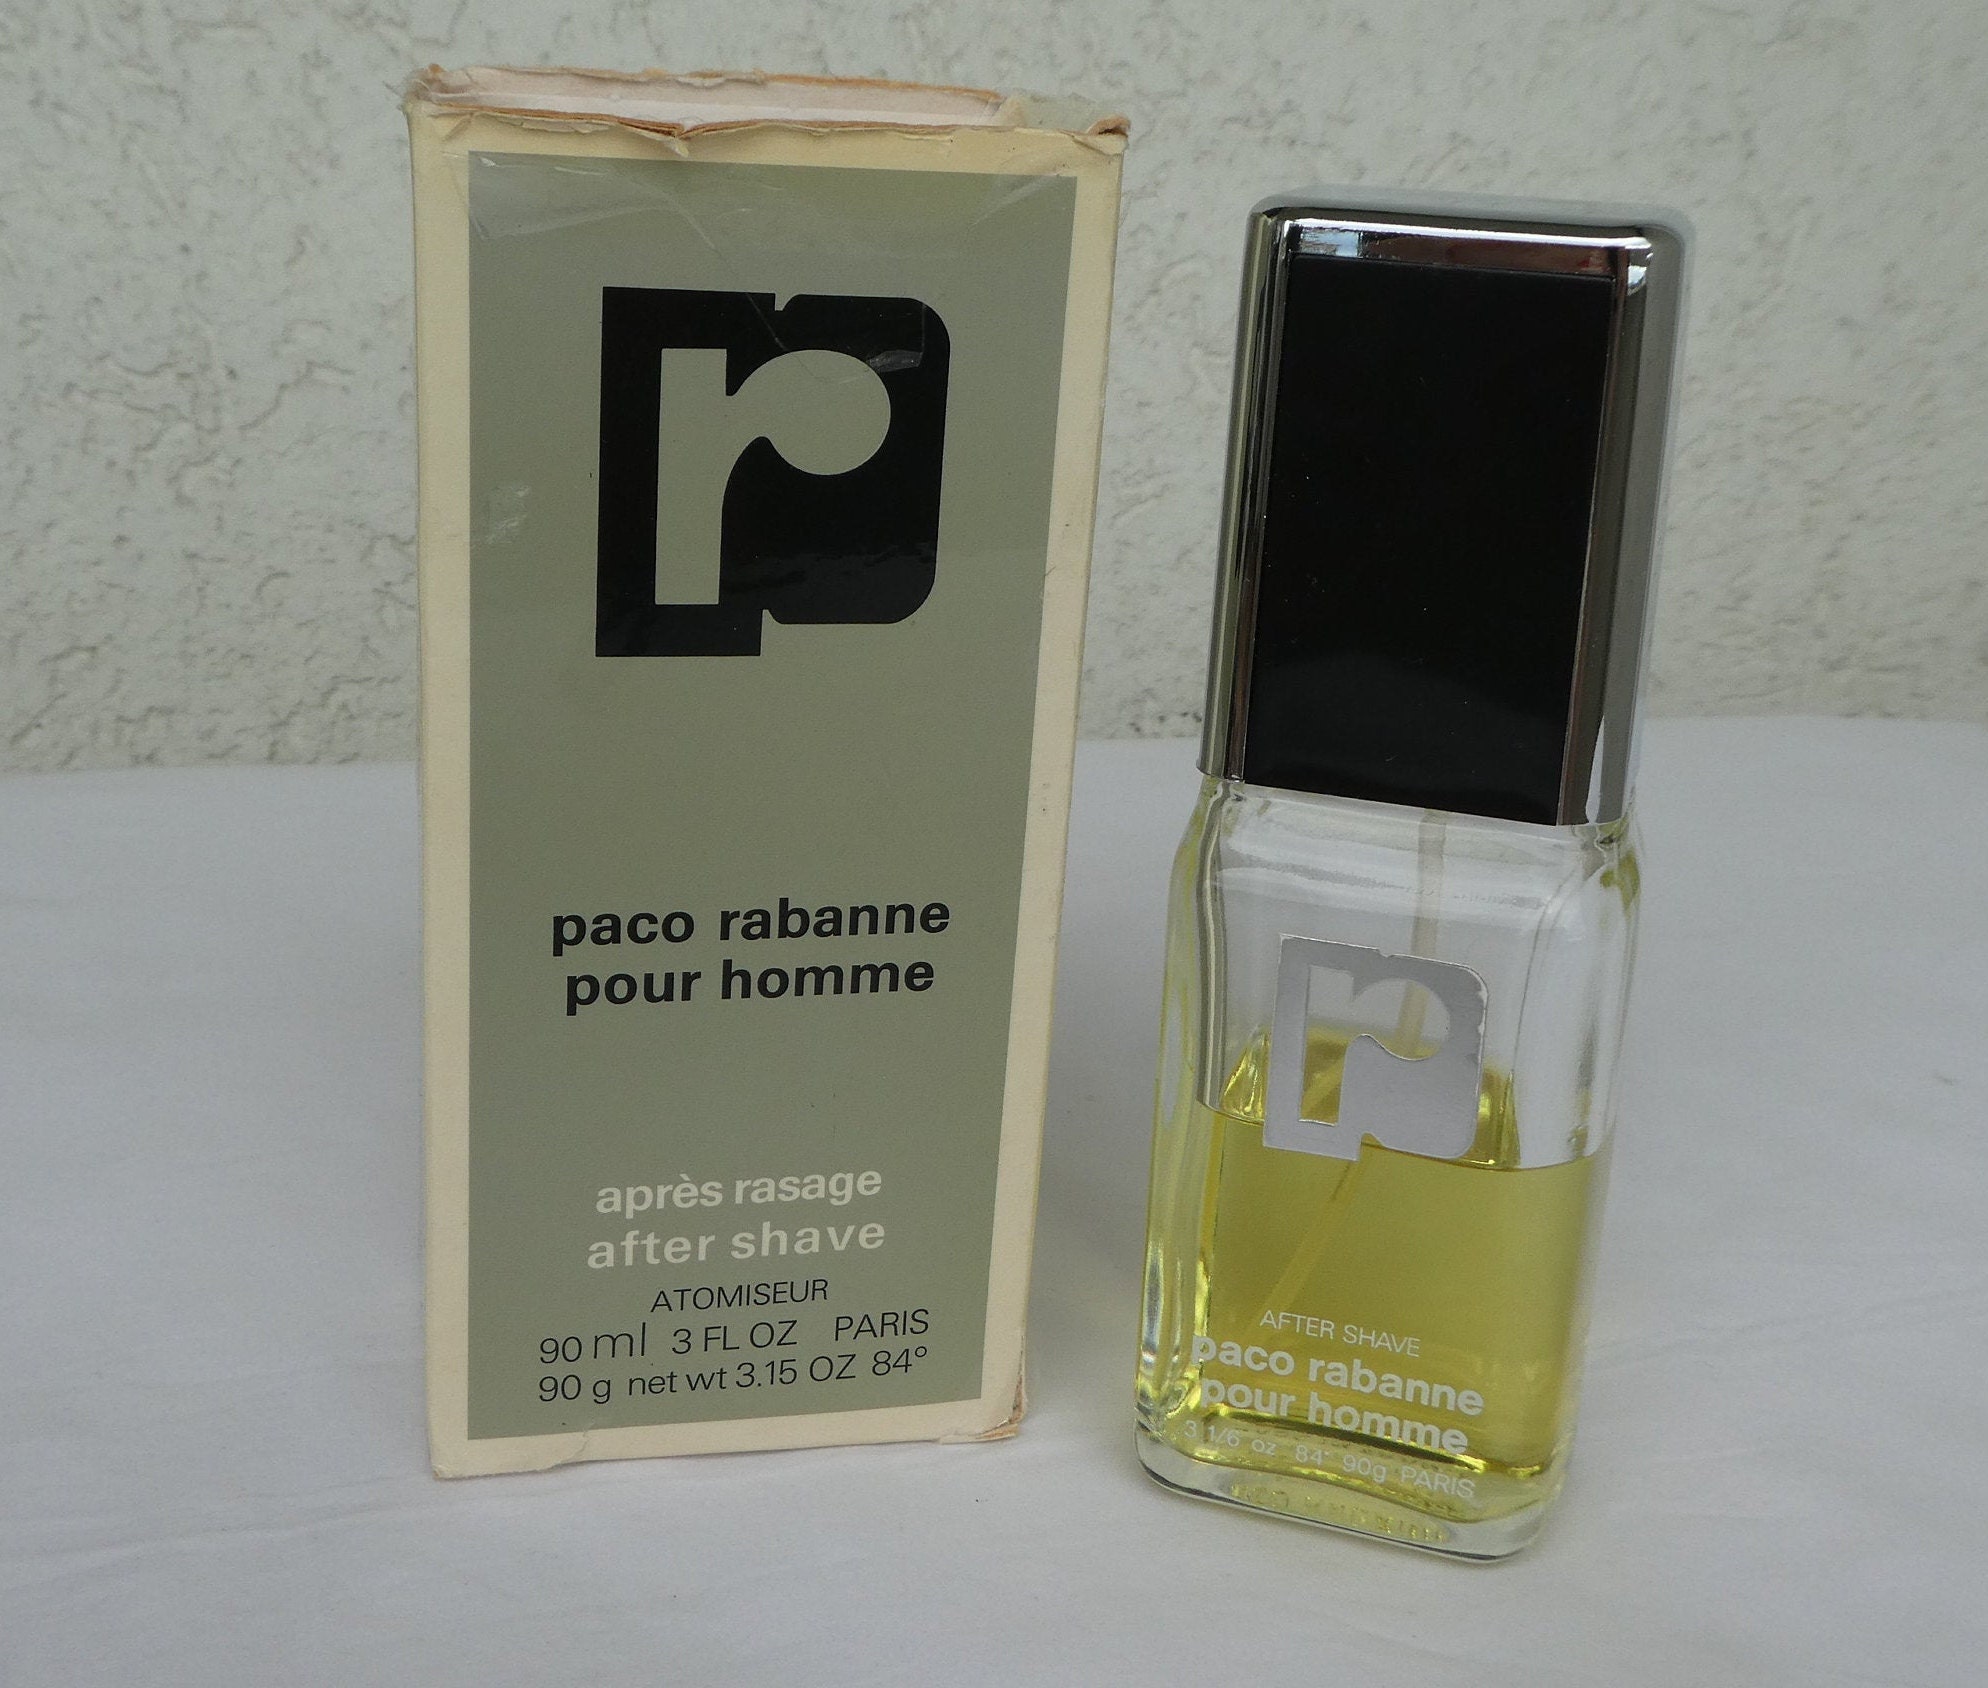 Vintage Paco Rabanne Pour Homme www.np.gov.lk